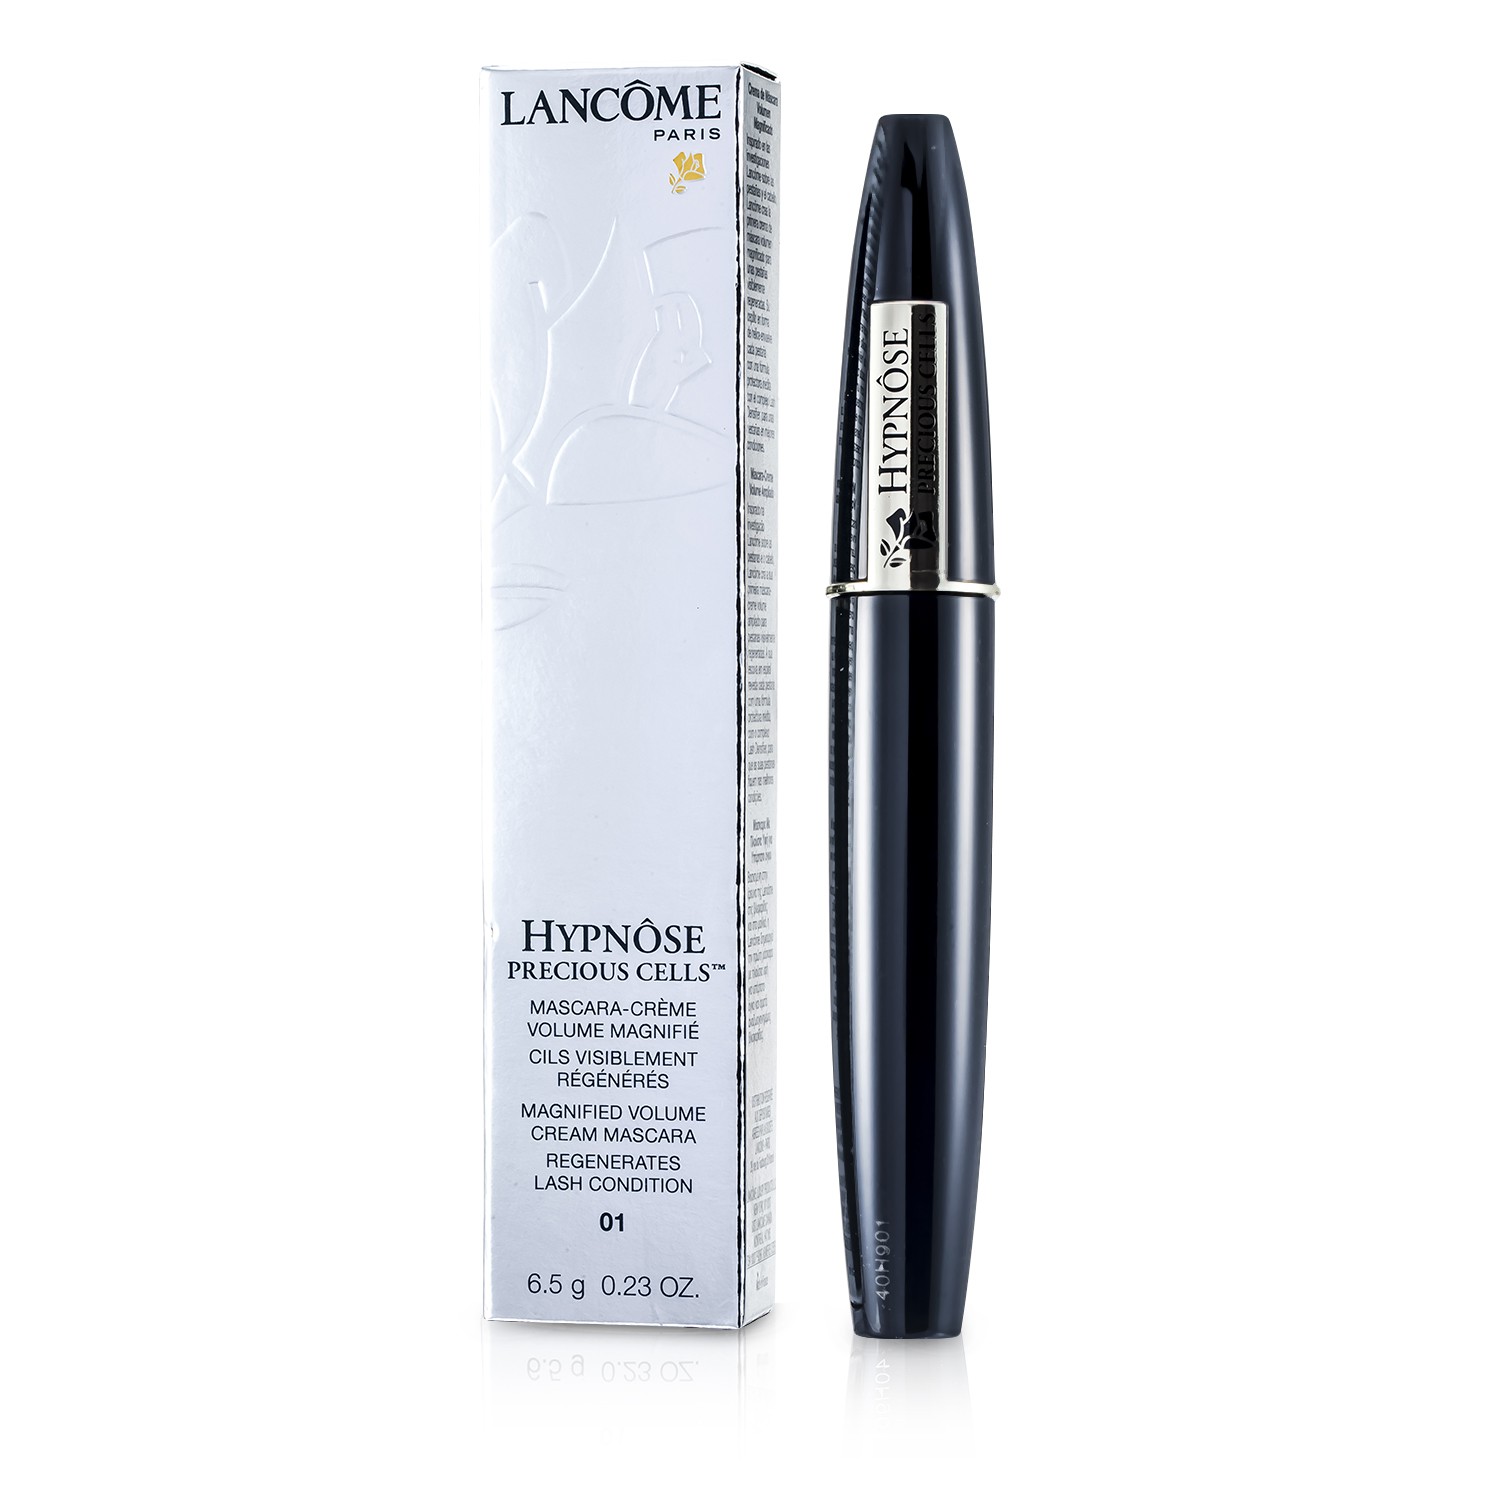 Lancome Hypnose Precious Cells Magnified Volume Cream Mascara 6.5g/0.23oz